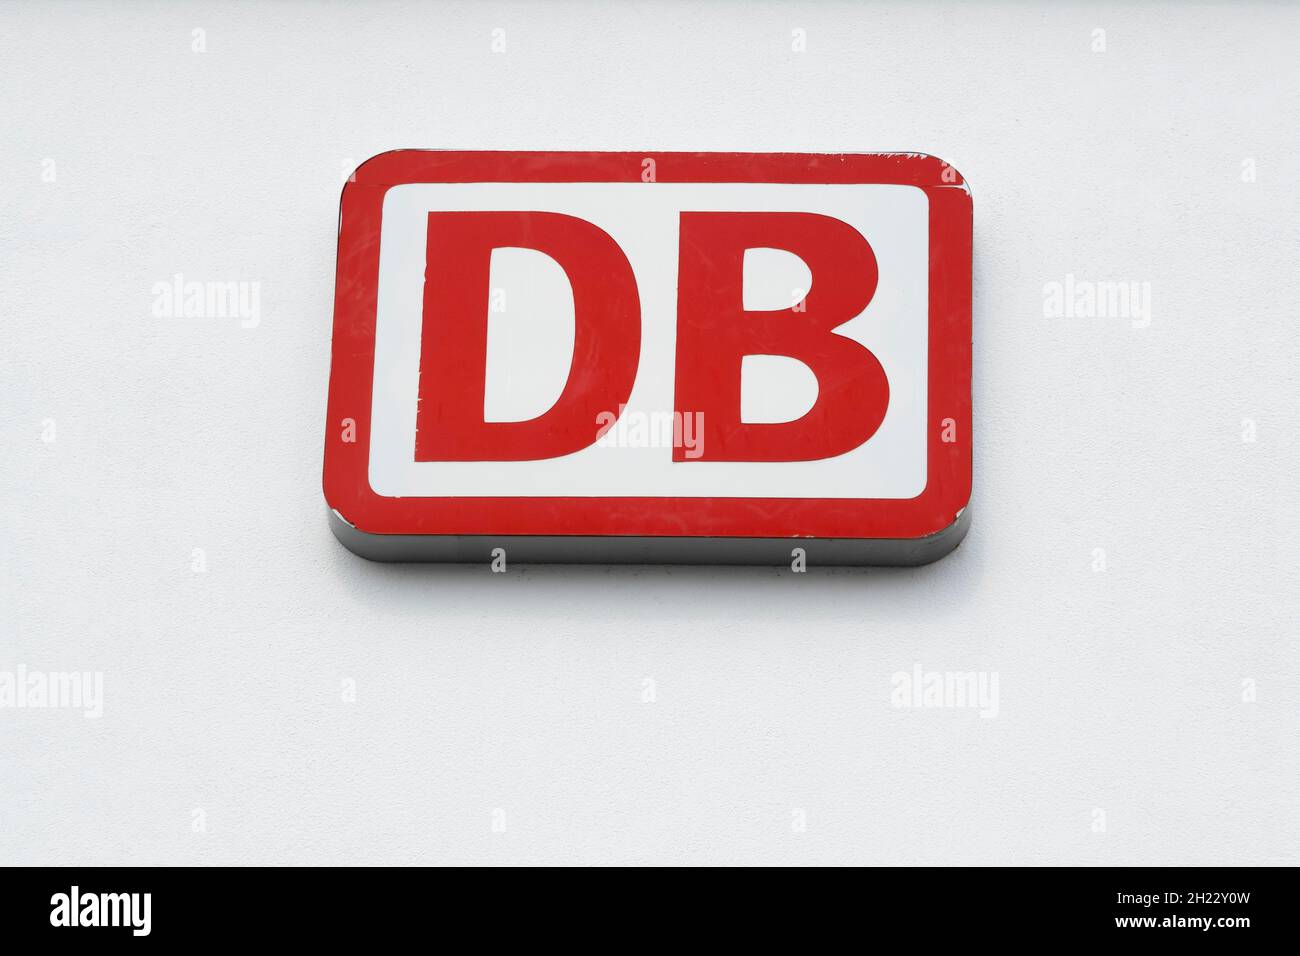 Sign and logo DB, Deutsche Bahn, welfare association, North Rhine-Westphalia, Germany Stock Photo